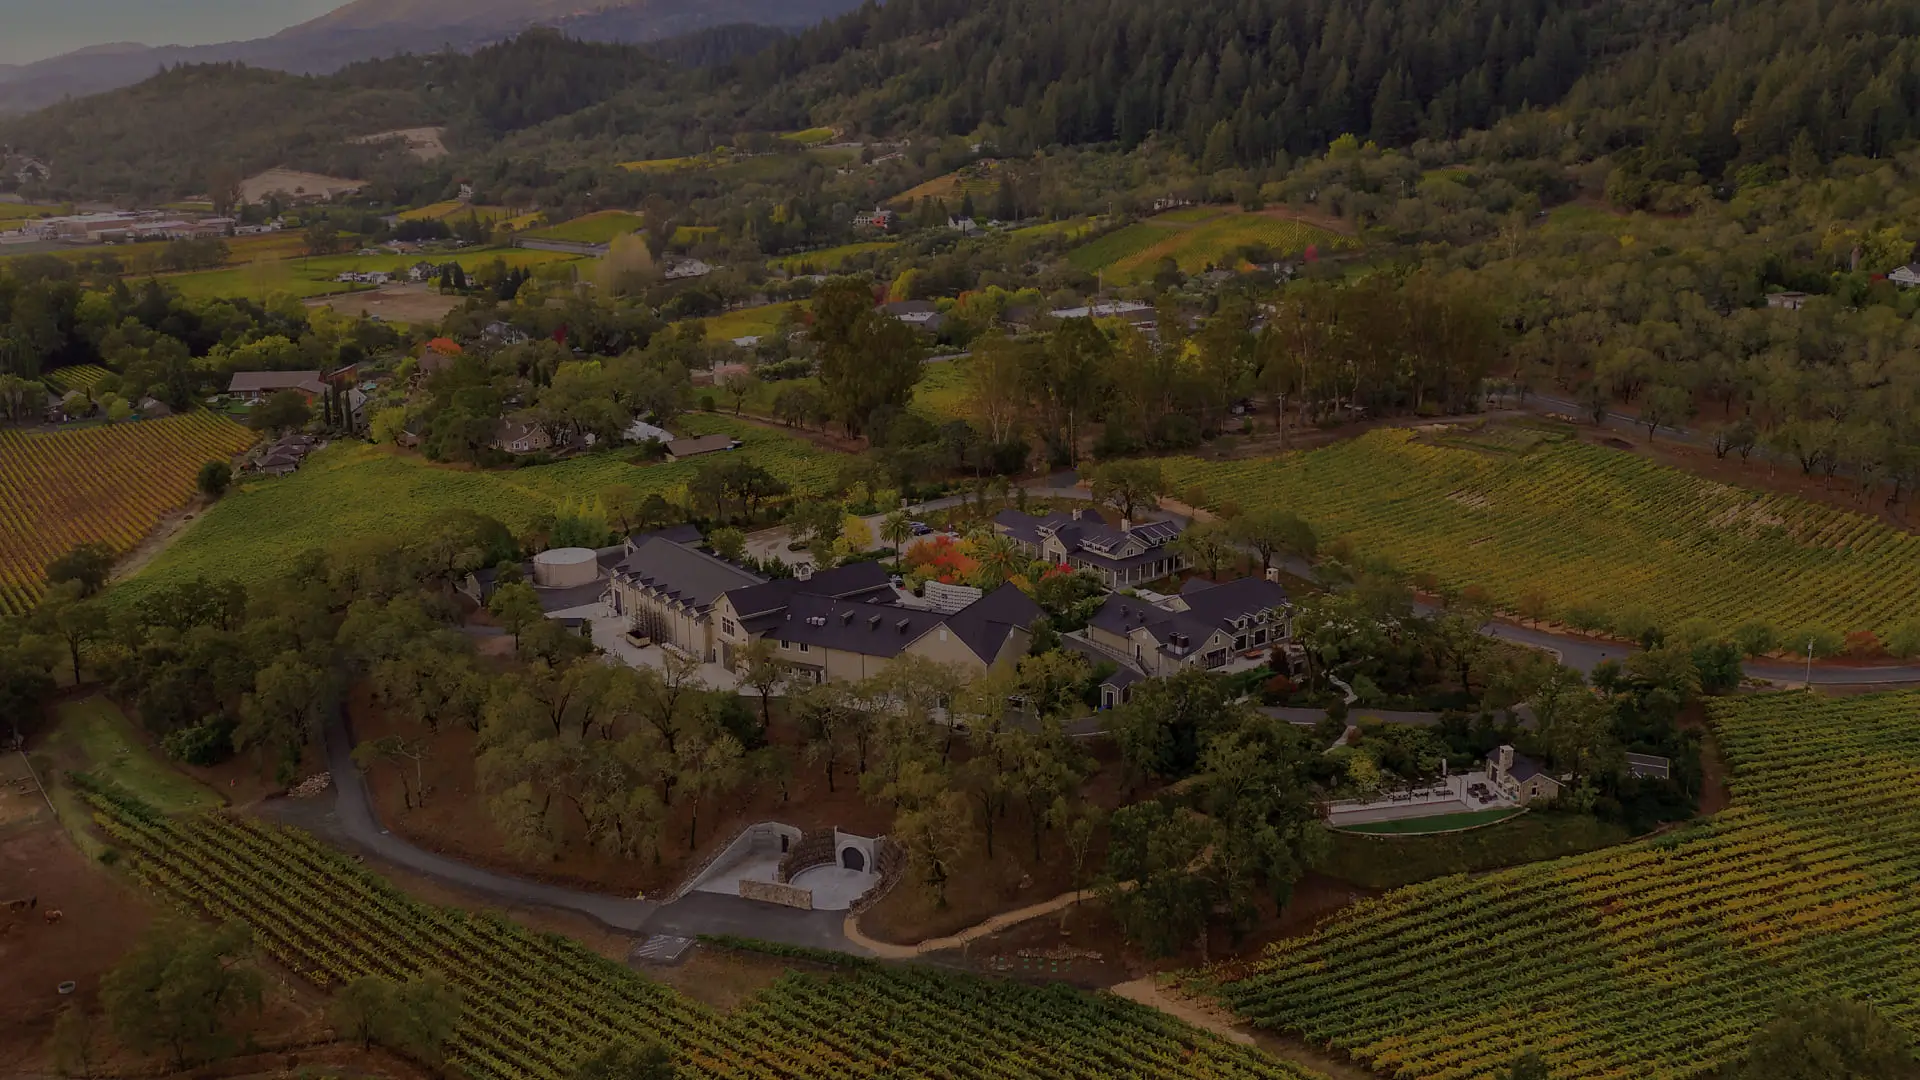 An aerial view of a vineyard in California.